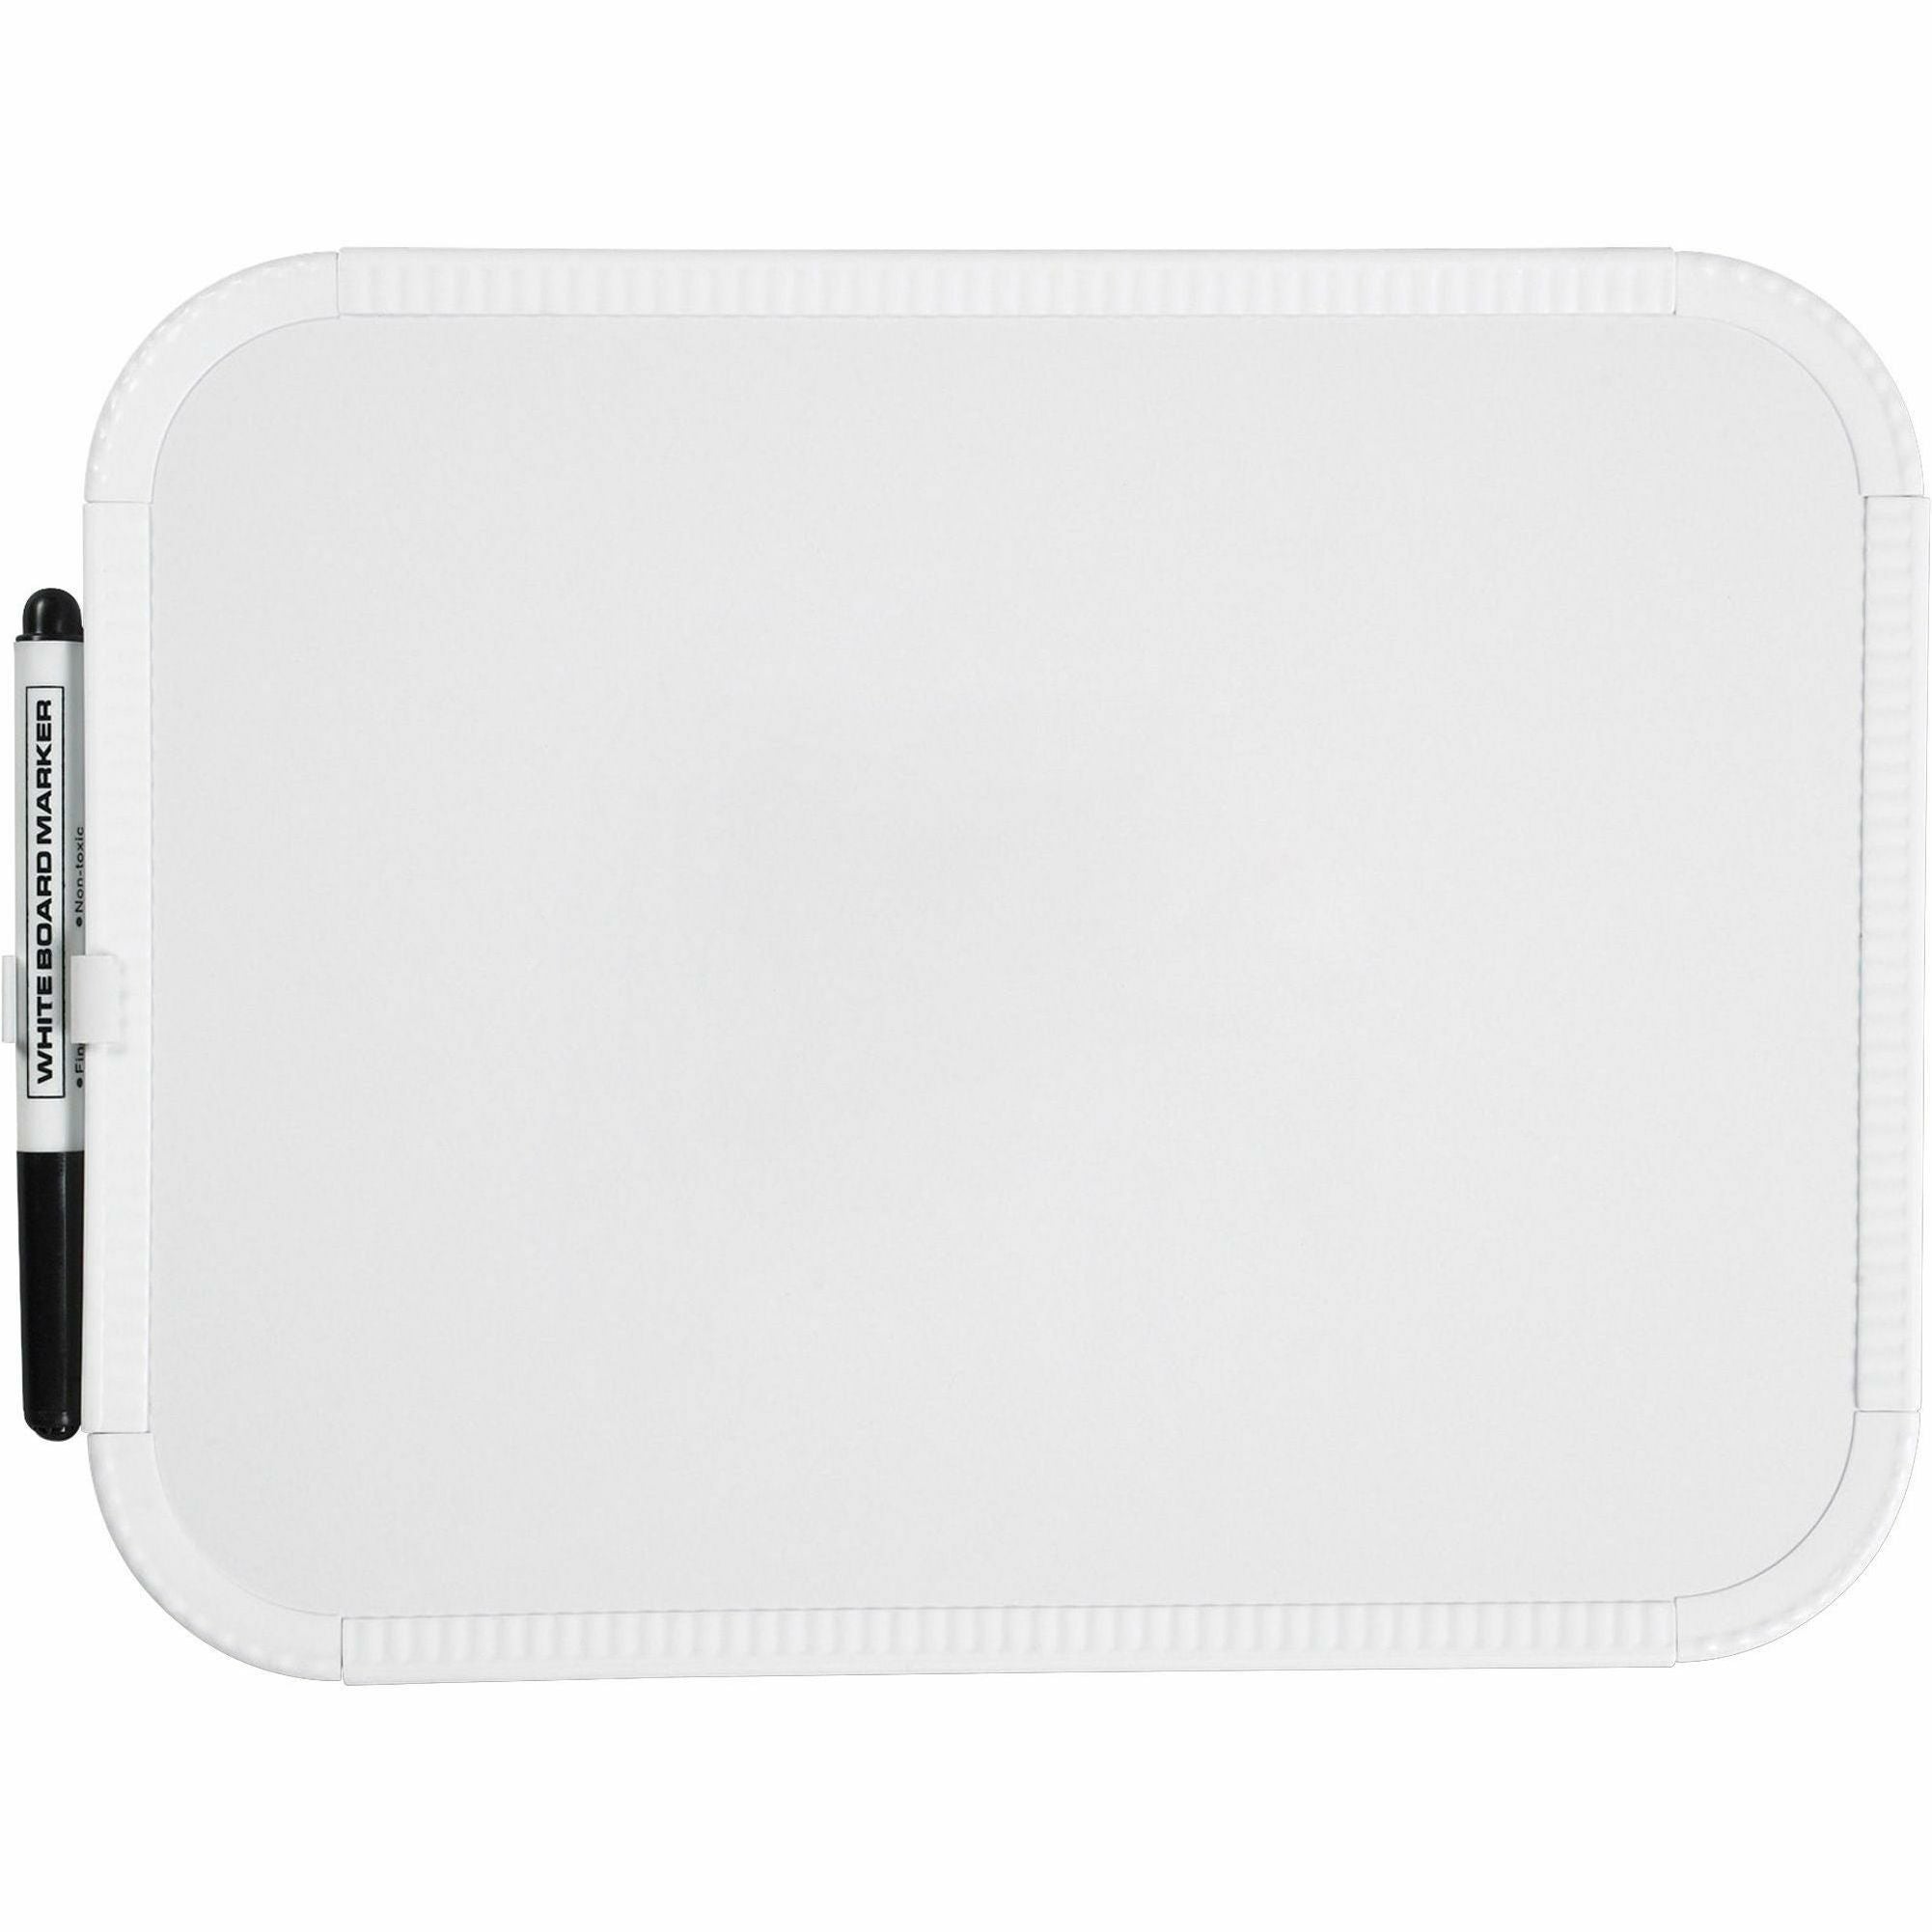 lorell-personal-whiteboard-11-09-ft-width-x-85-07-ft-height-white-melamine-surface-white-plastic-frame-rectangle-1-each_llr75620 - 3